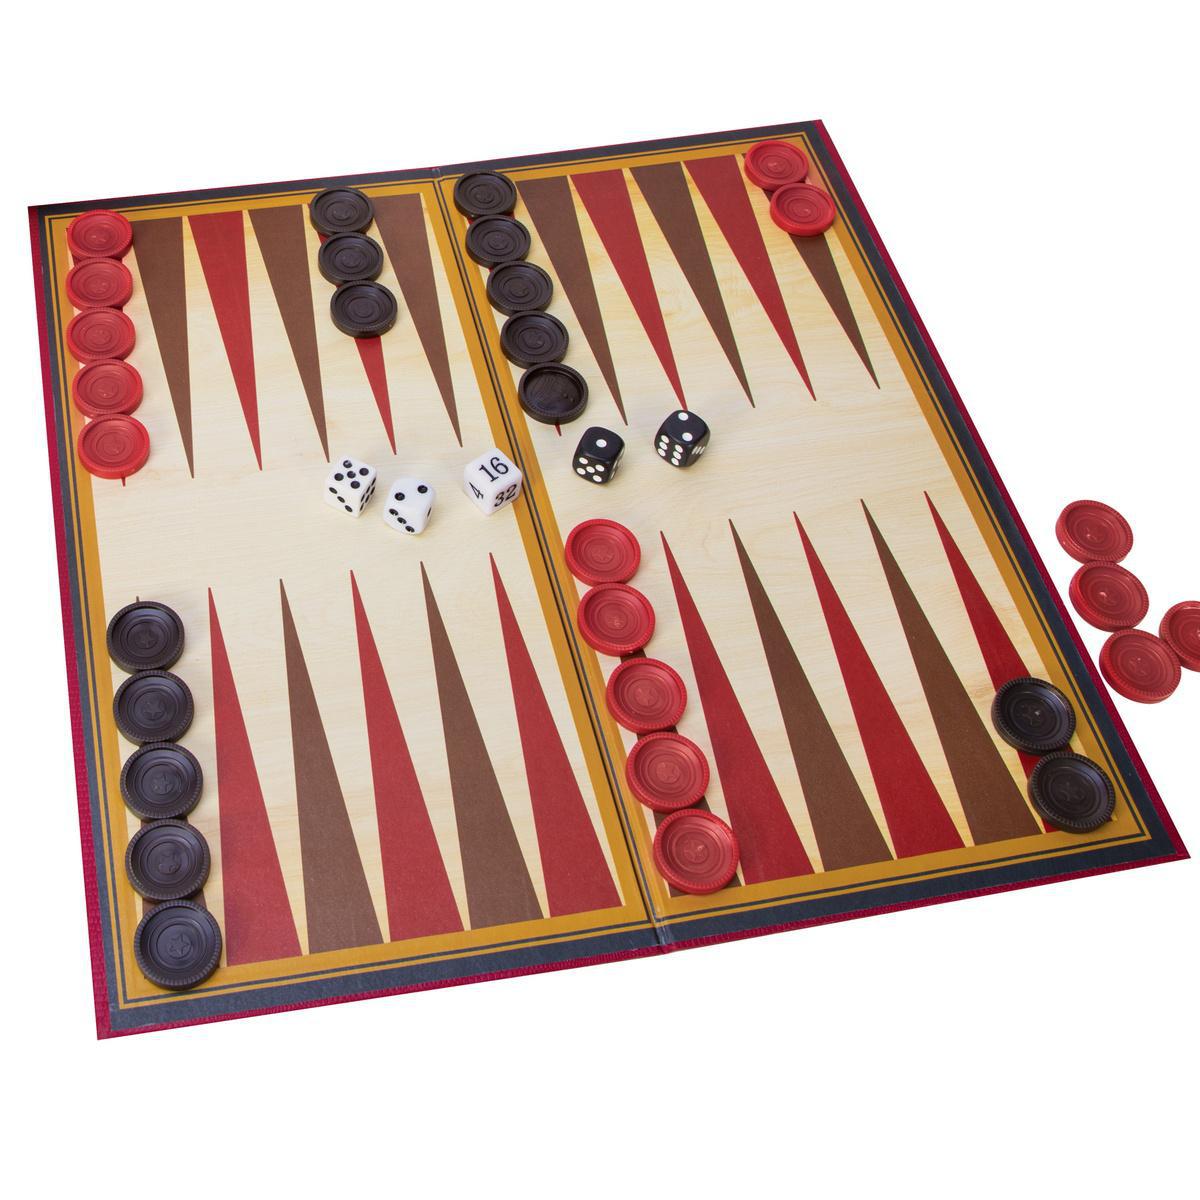 Classic Backgammon Game